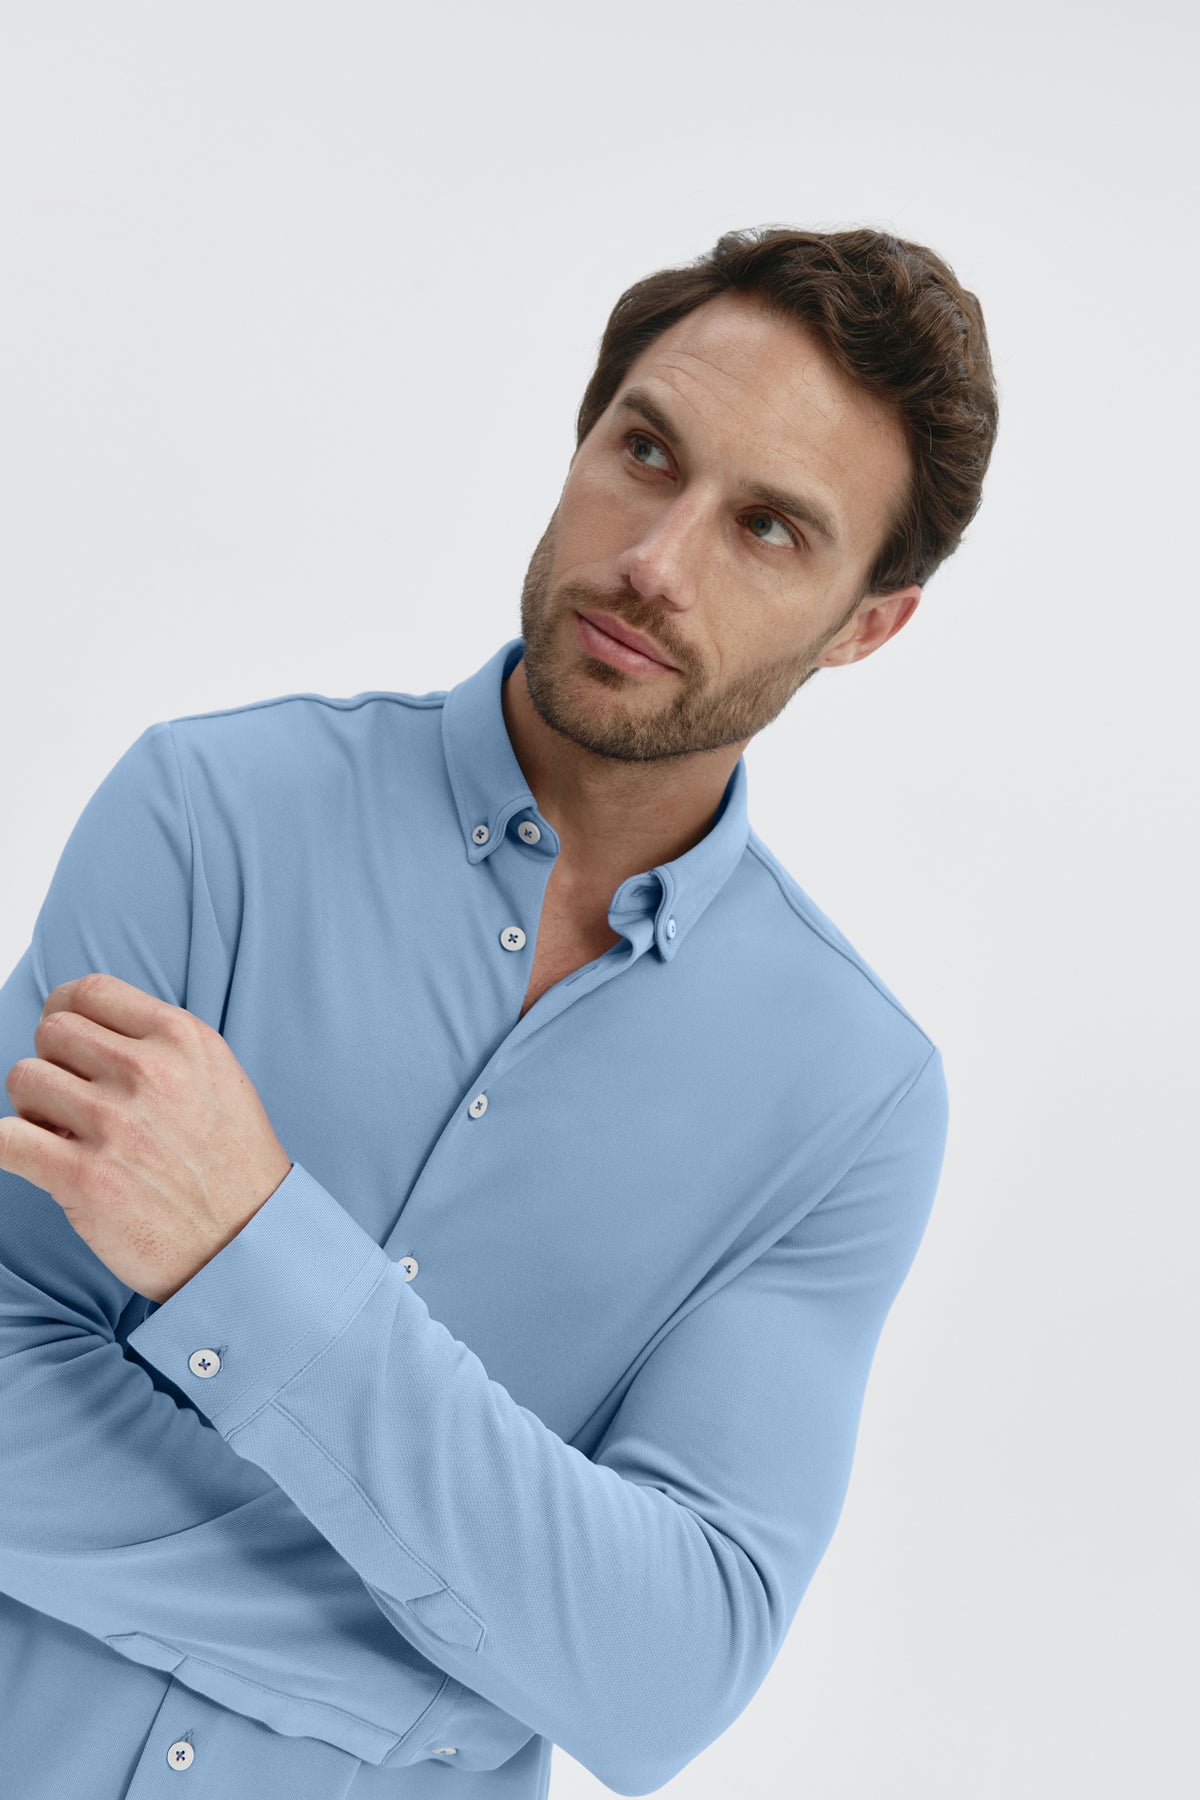 Camisa casual azul cabo regular para hombre sin arrugas ni manchas. Manga larga, antiarrugas y antimanchas. Foto detalle